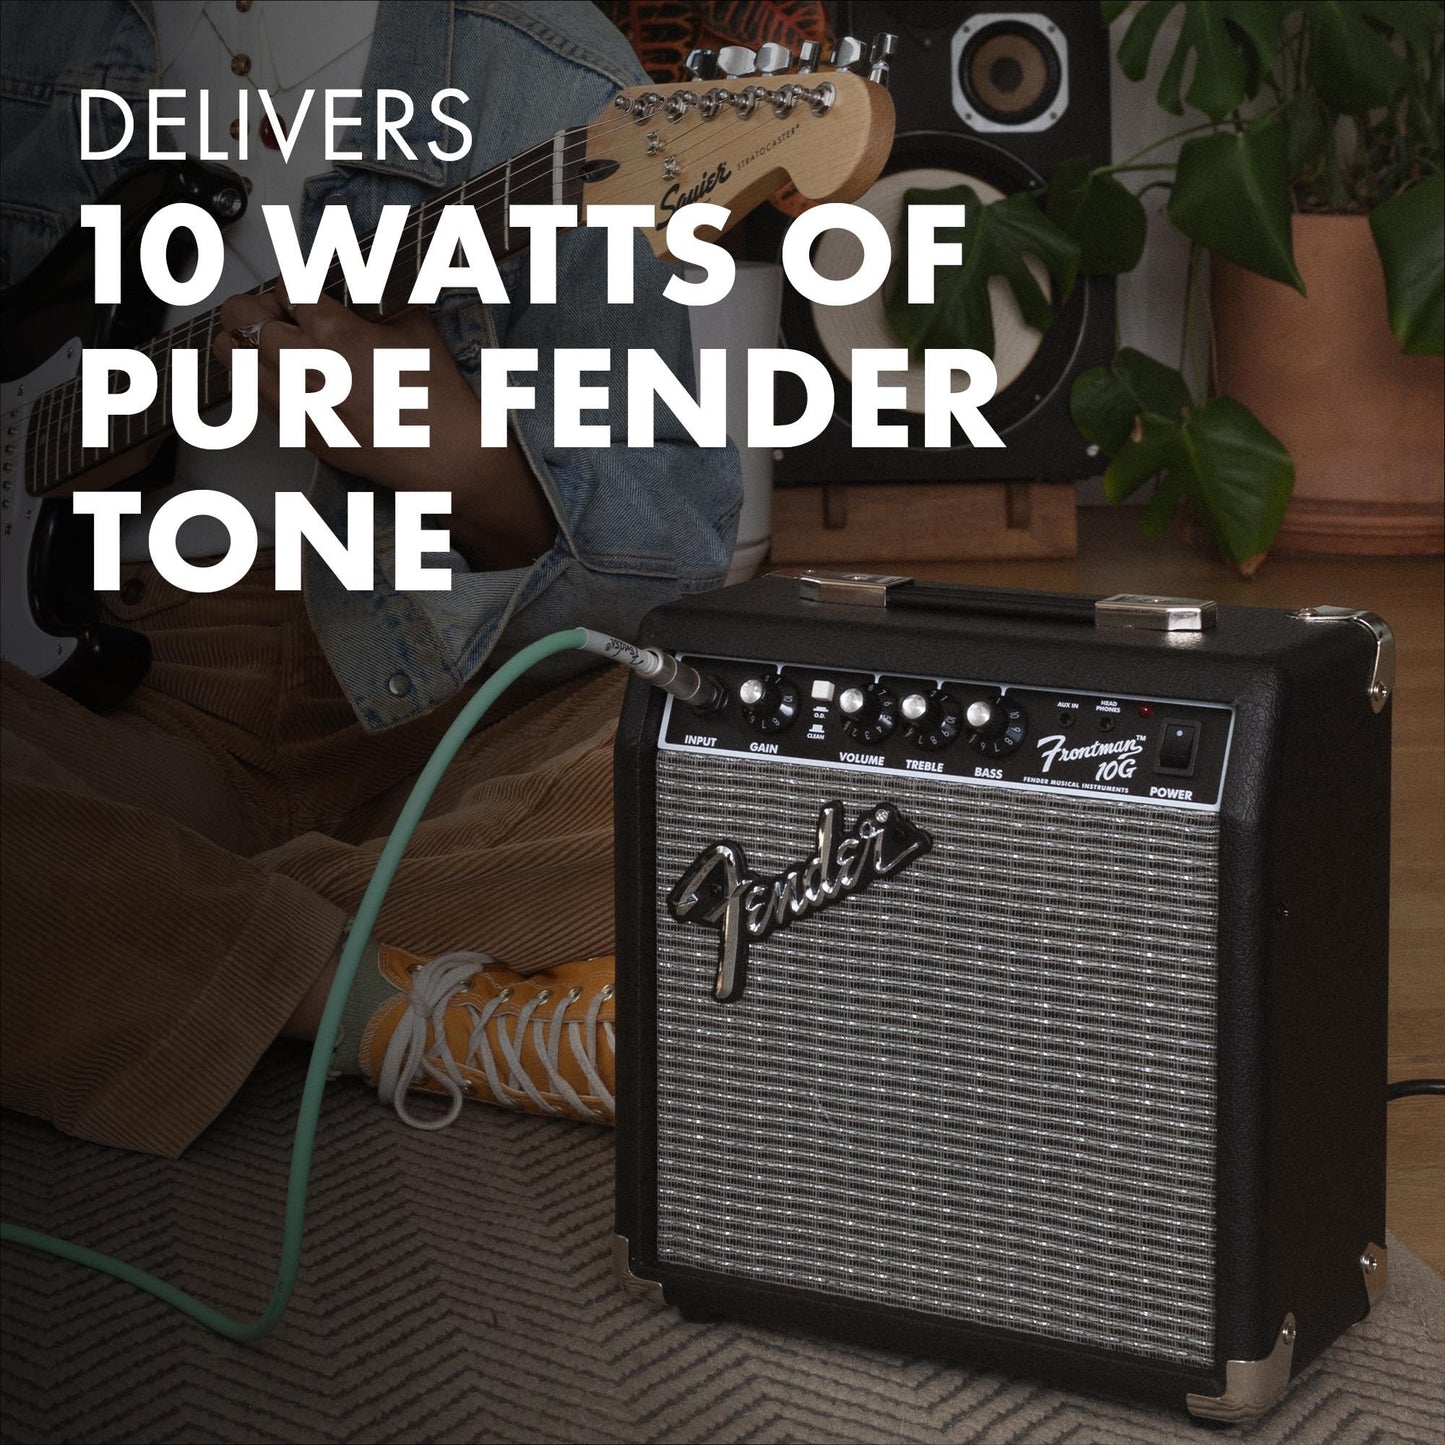 Fender Frontman 10G Guitar Amp, 10 Watts, with 2-Year Warranty, 6 Inch Fender Special Design Speaker, 5.75Dx10.25Wx11H Inches